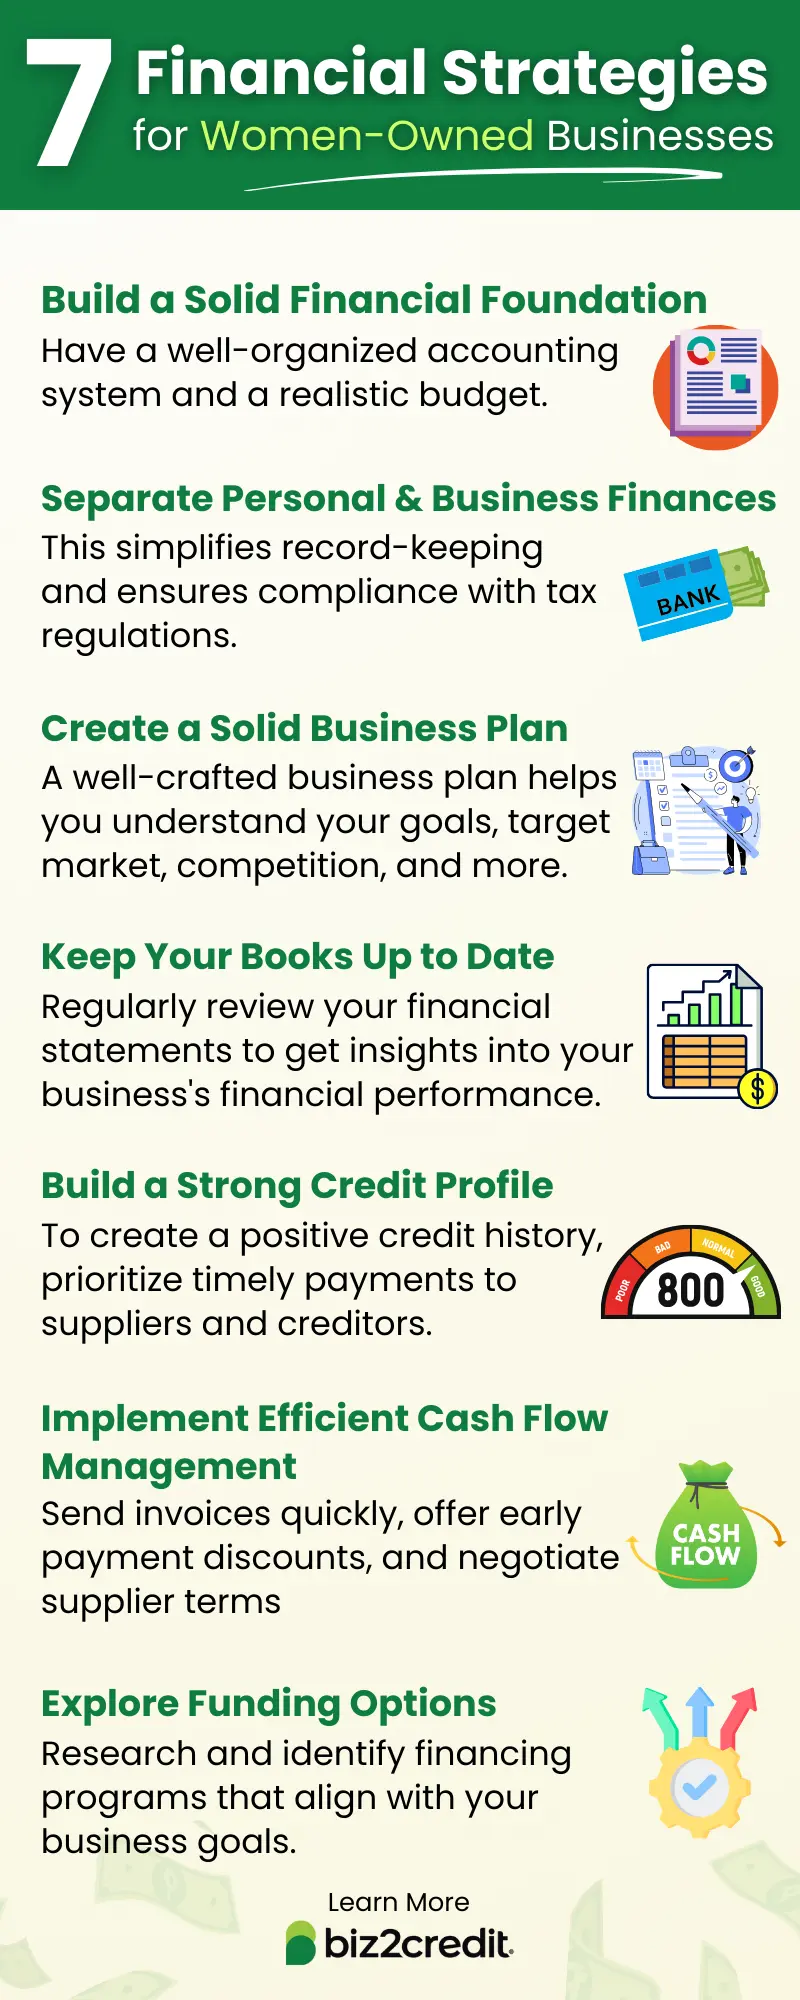 7 Financial Strategies